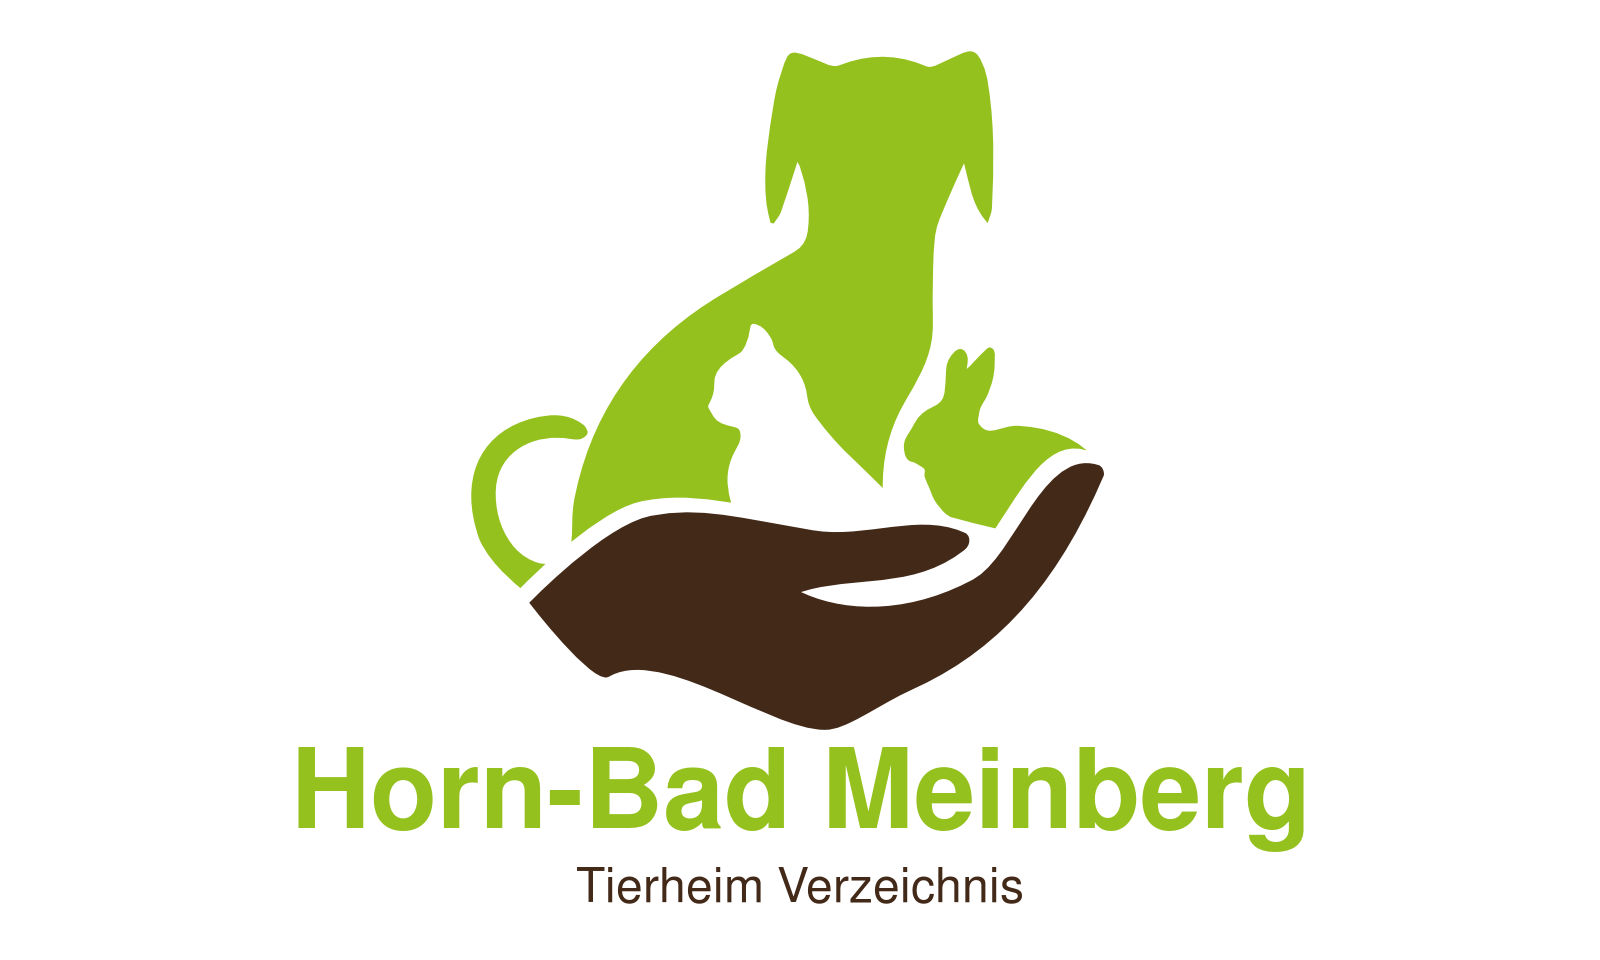 Tierheim Horn-Bad Meinberg